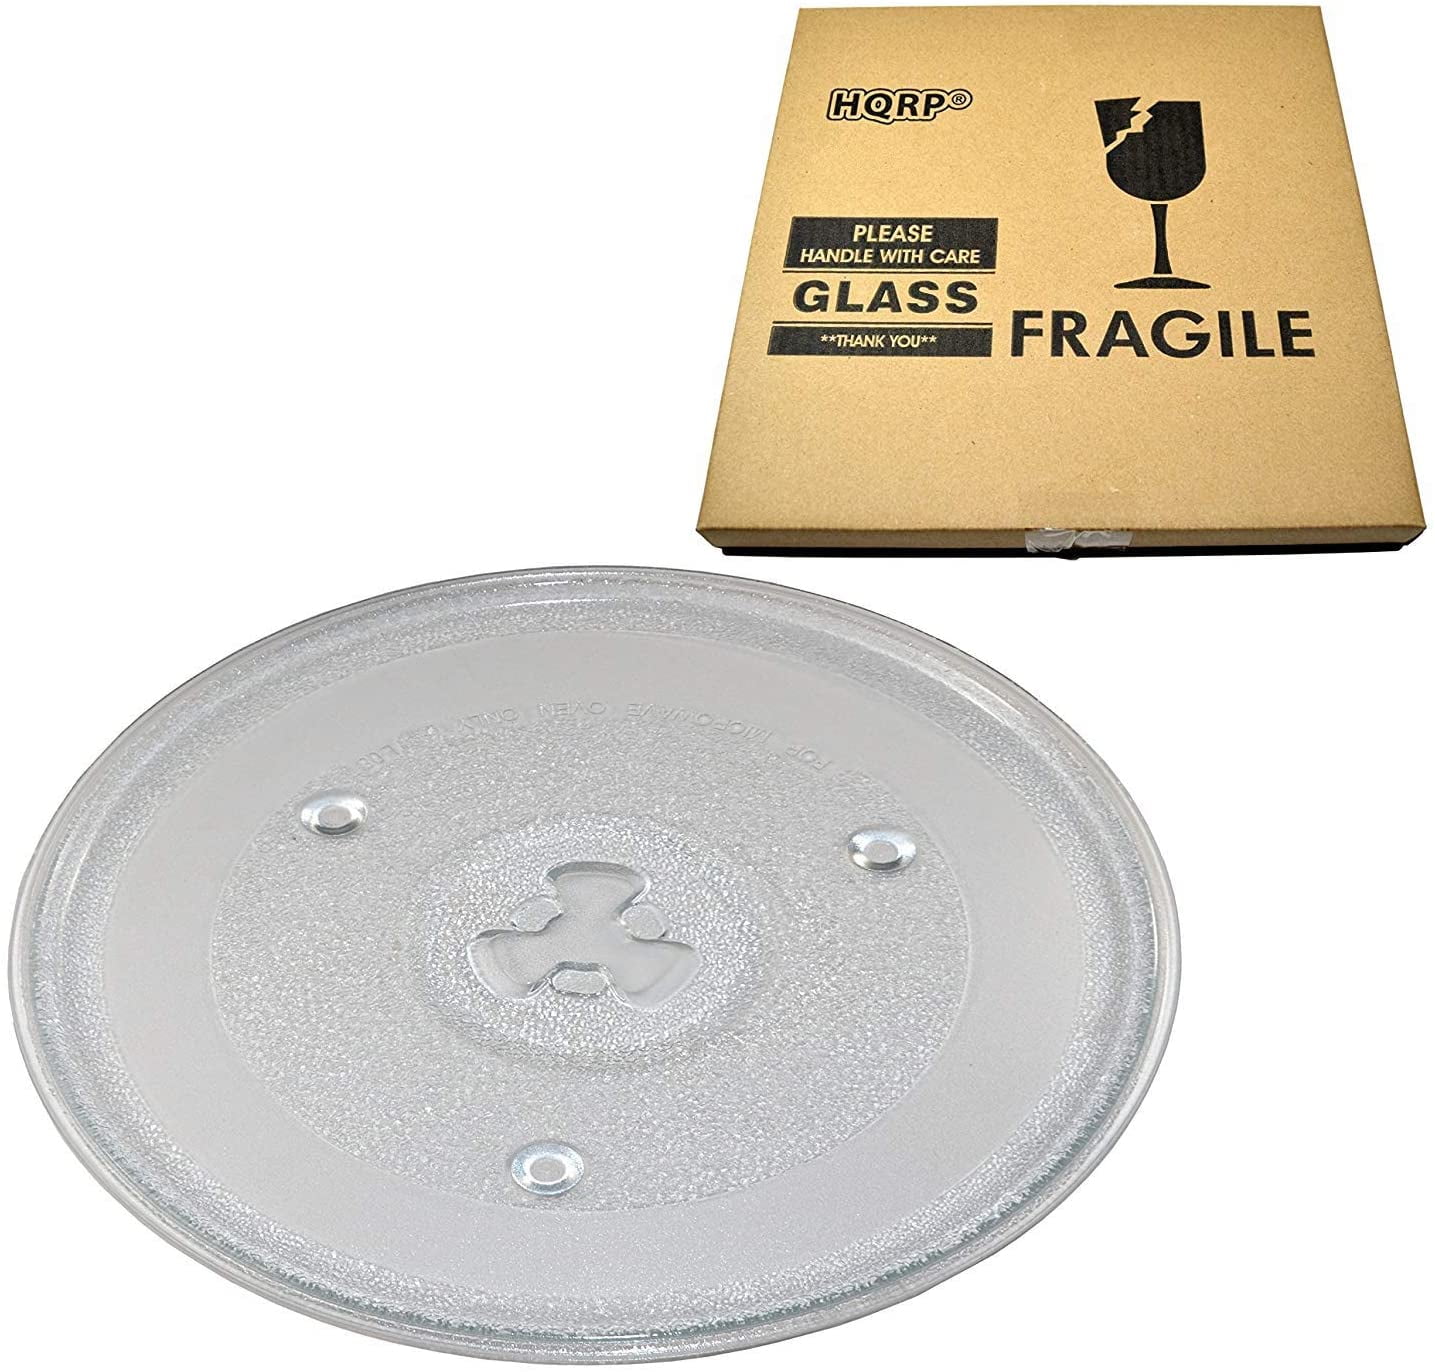 PANASONIC Compatible MICROWAVE TURNTABLE Glass Plate Dish 270mm 27cm 10.5"